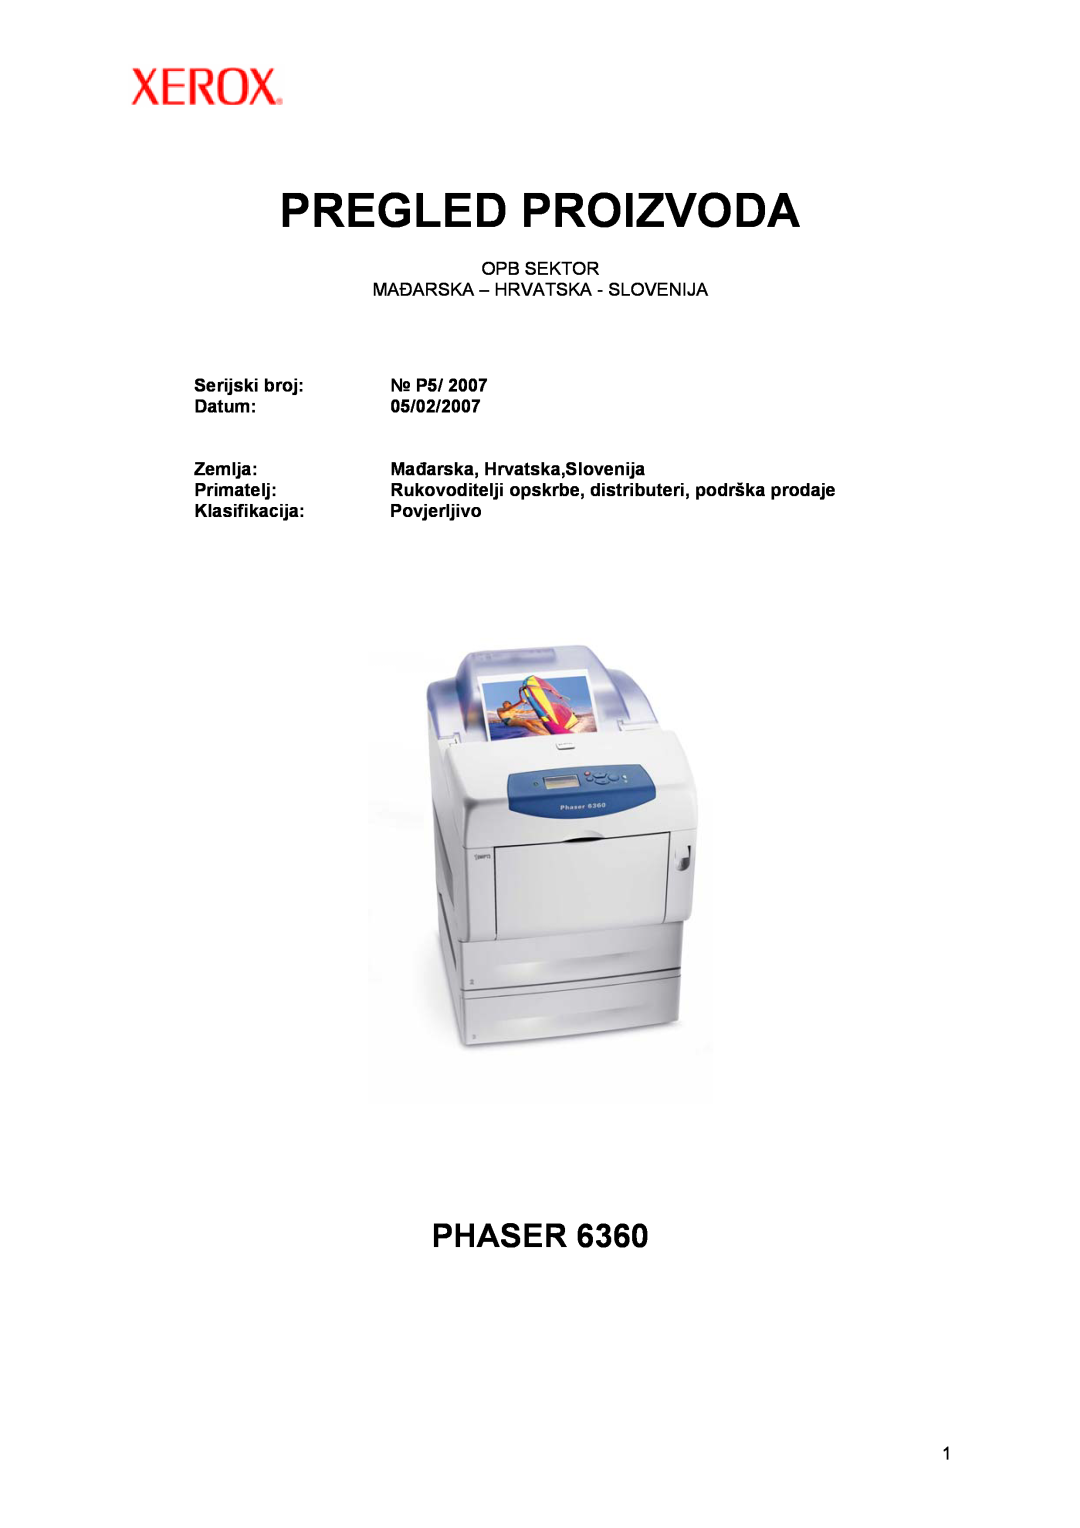 Xerox P5/ 2007 manual Pregled Proizvoda, Phaser 